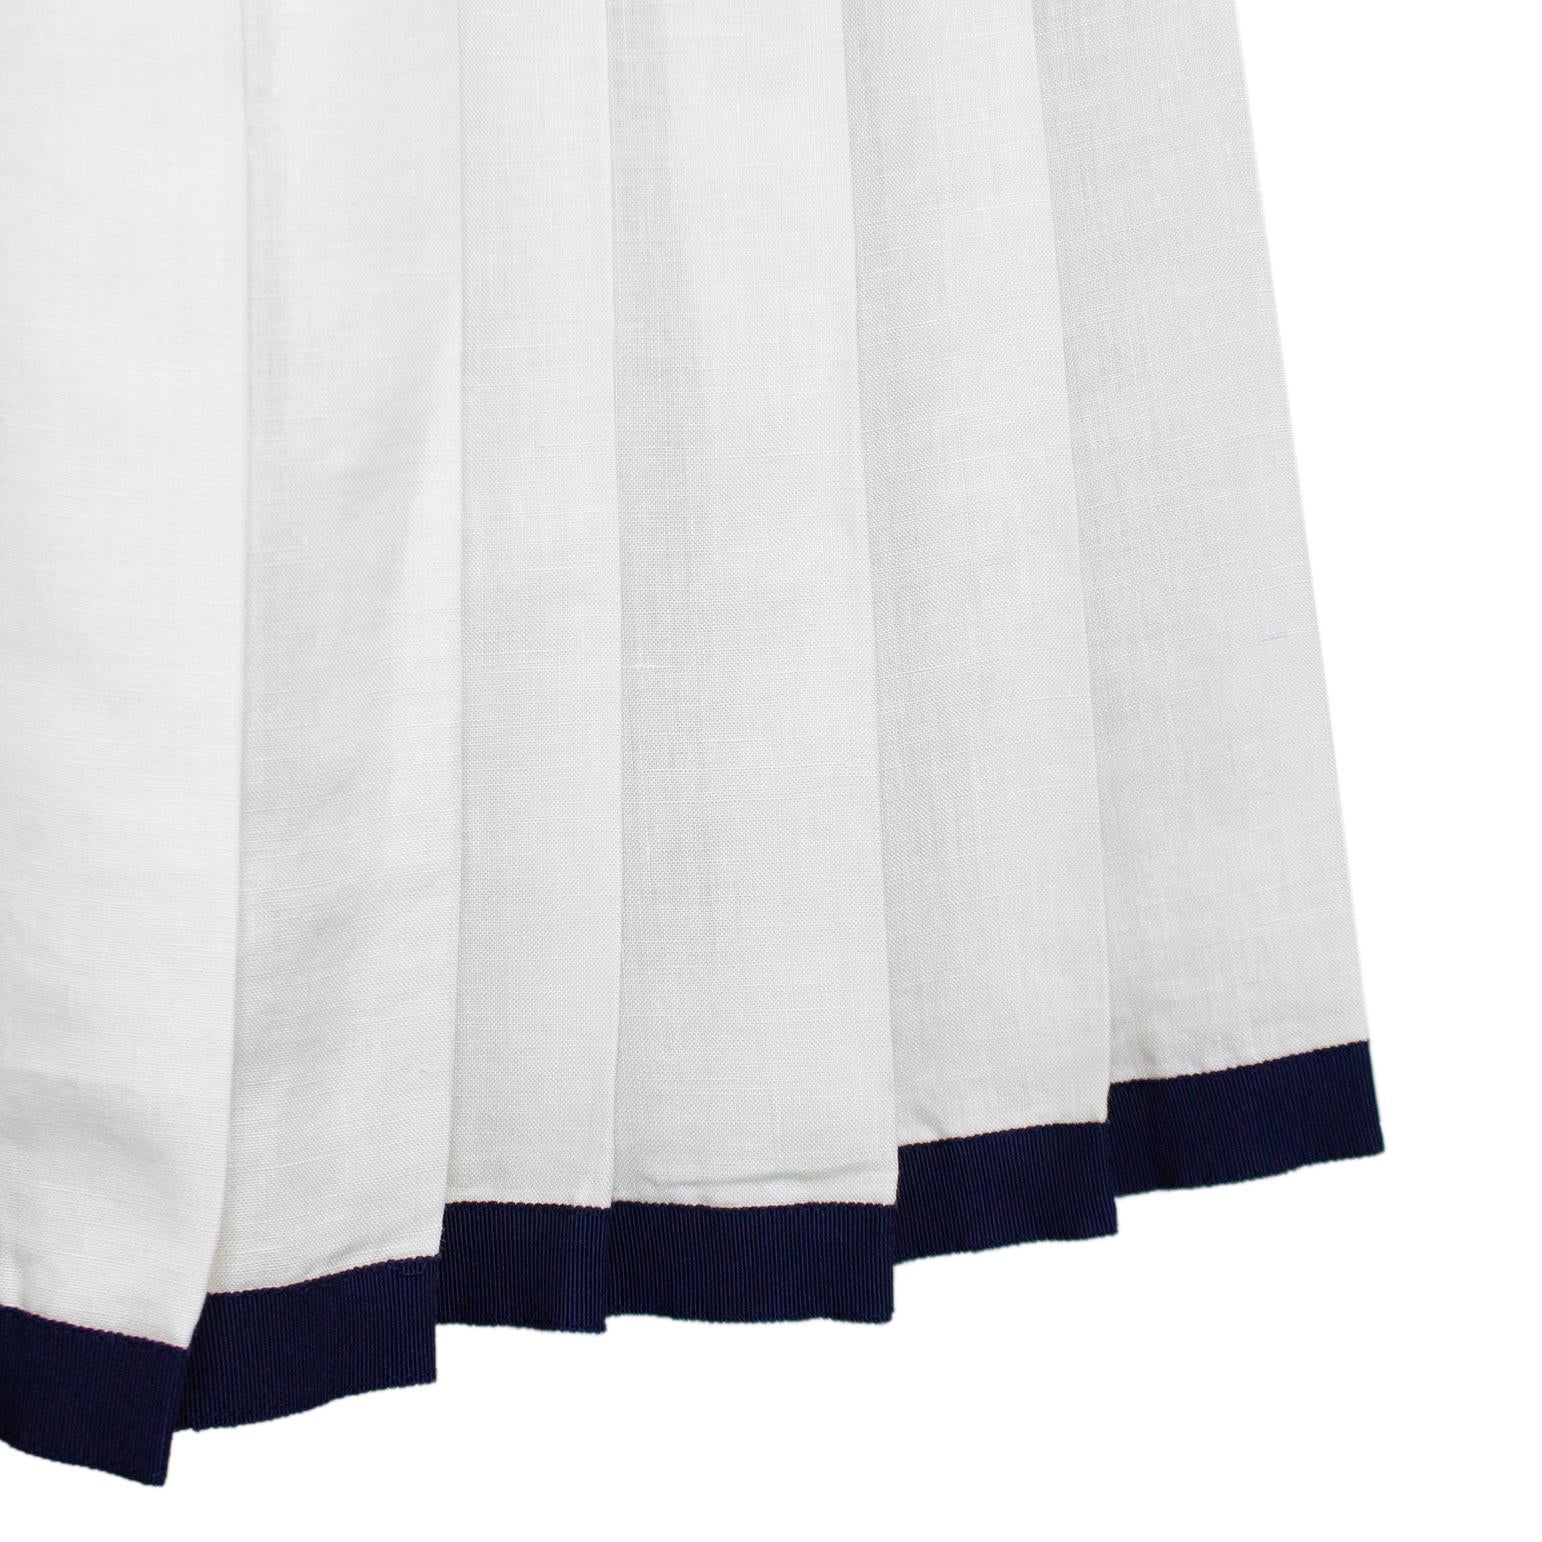 1980s Chanel Cream and Navy Linen Summer Skirt Ensemble For Sale 2